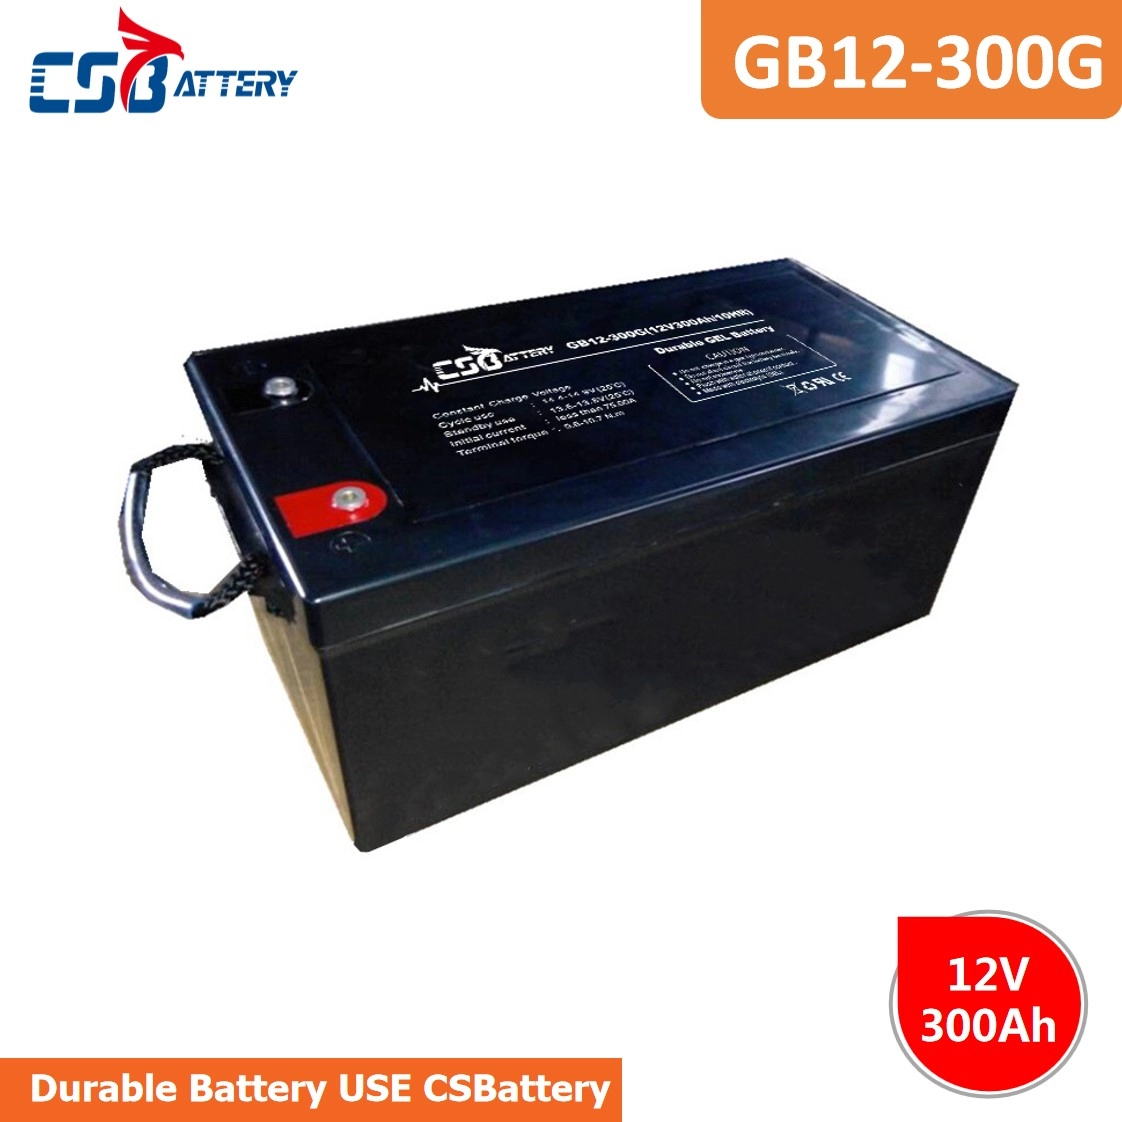 GB12-300G 12V 300Ah Durable Long Life Gel Battery